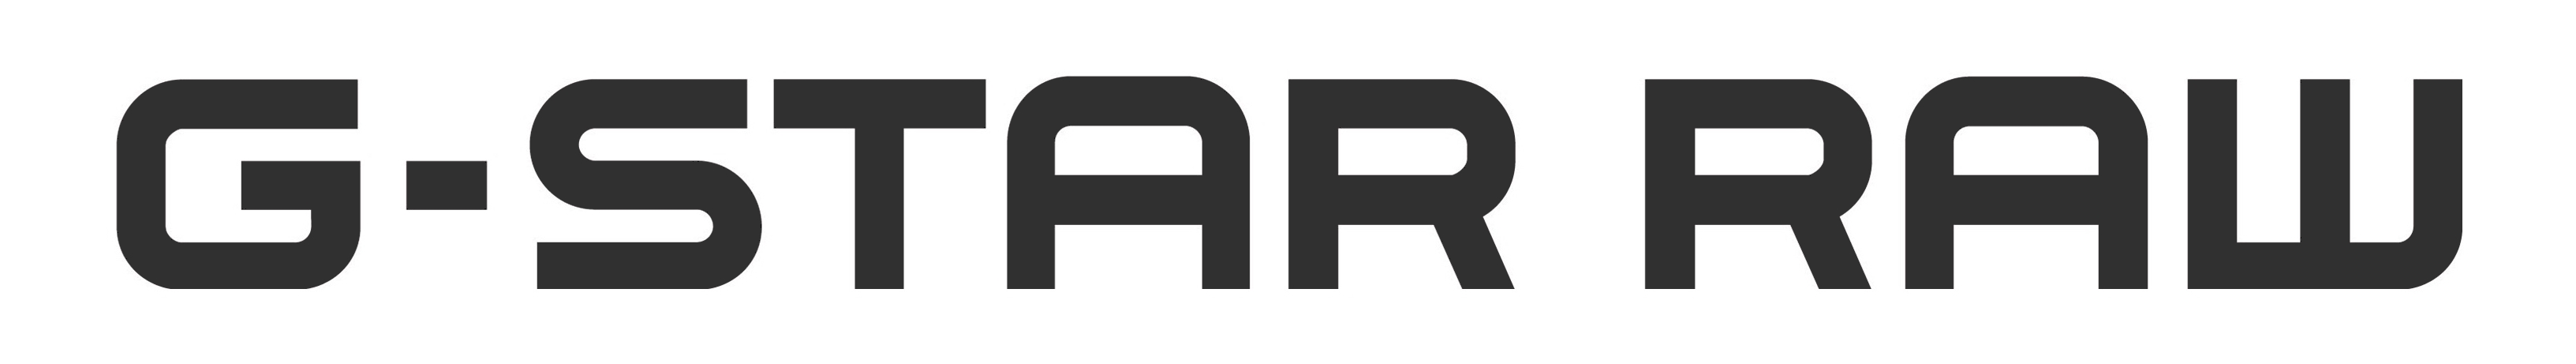 G-Star Raw logo, logotype